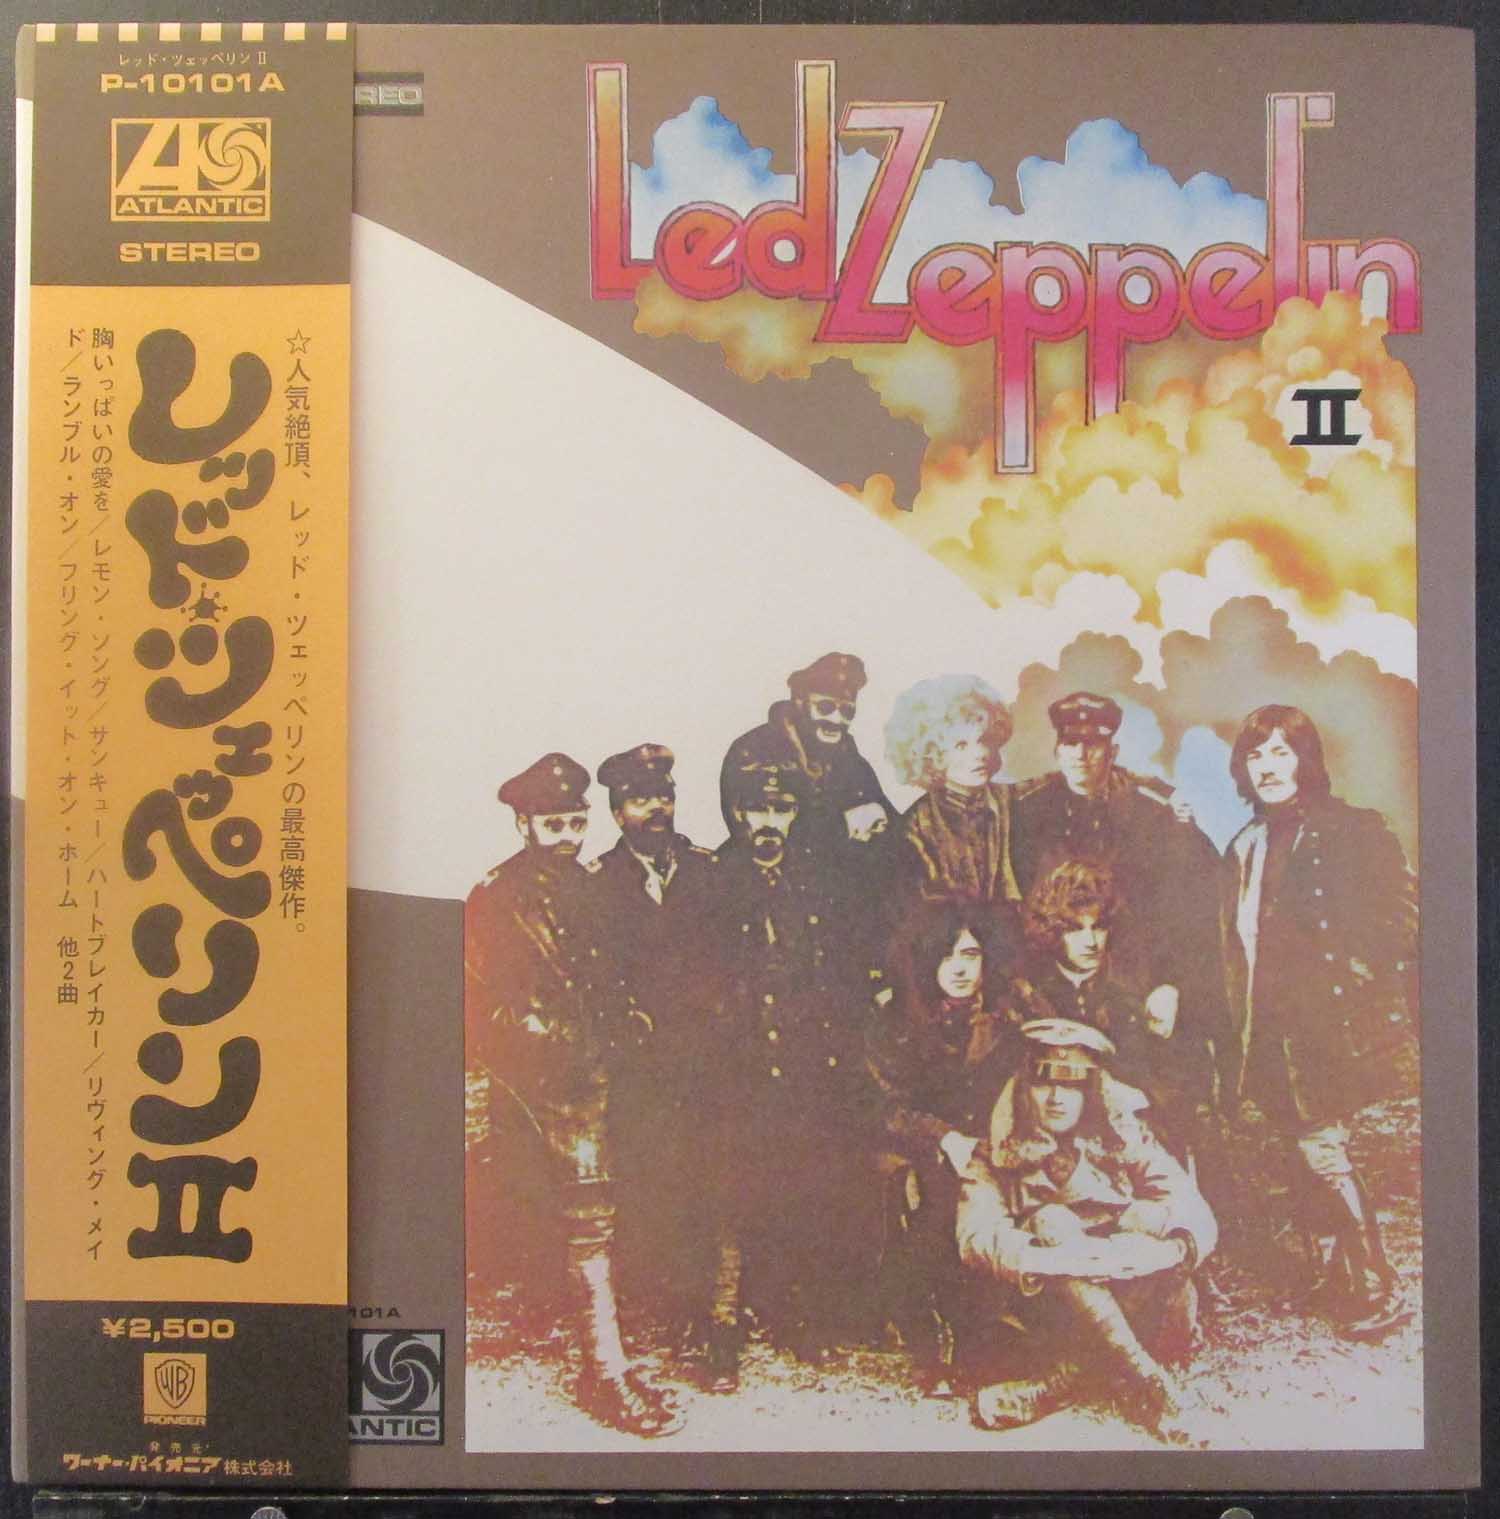 Led Zeppelin - Led Zeppelin II Japan LP with poster and obi